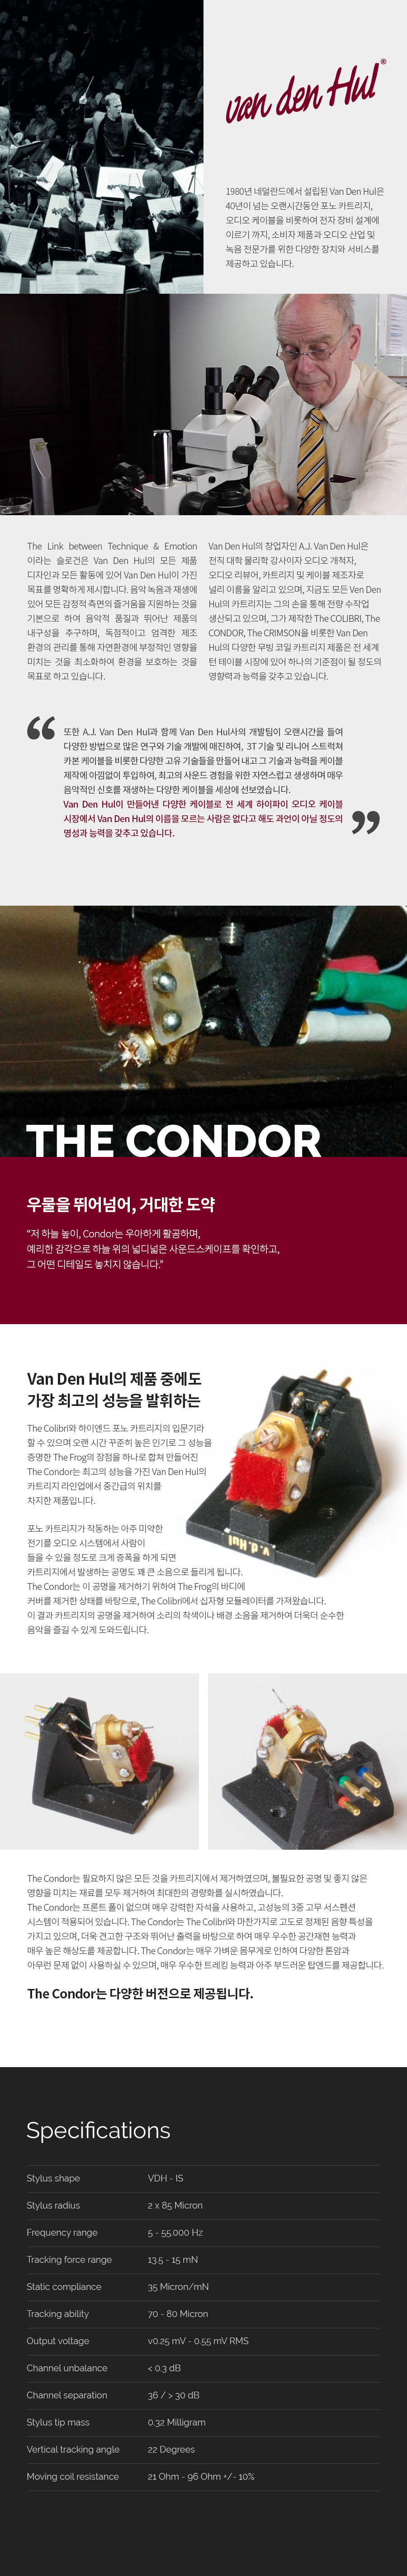 Condor_info.jpg